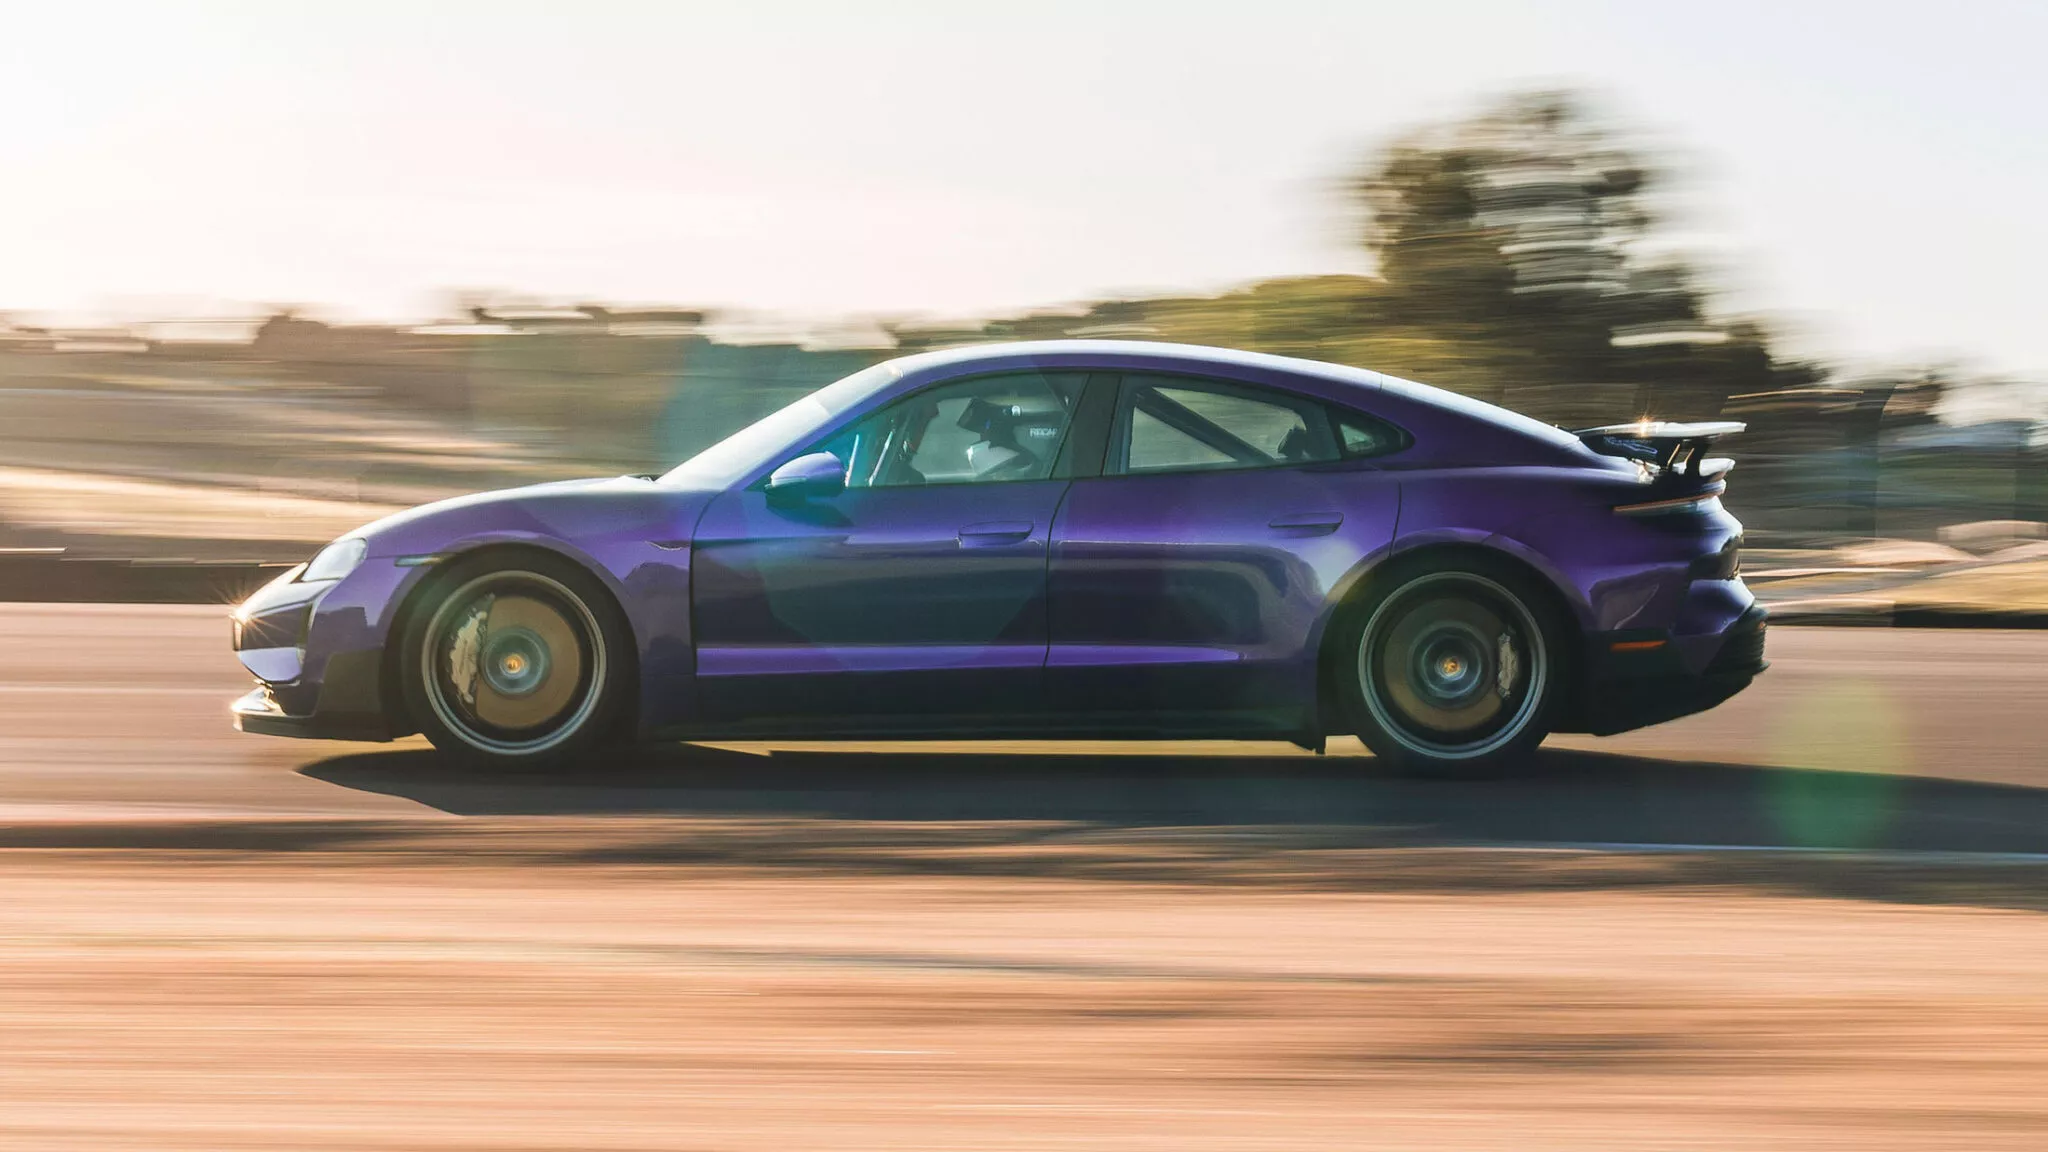 Siêu xe điện Porsche Taycan Turbo GT trình làng, mạnh 1.092 mã lực porsche-taycan-turbo-gt-sky-purple-metallic-5s-2048x1152.webp